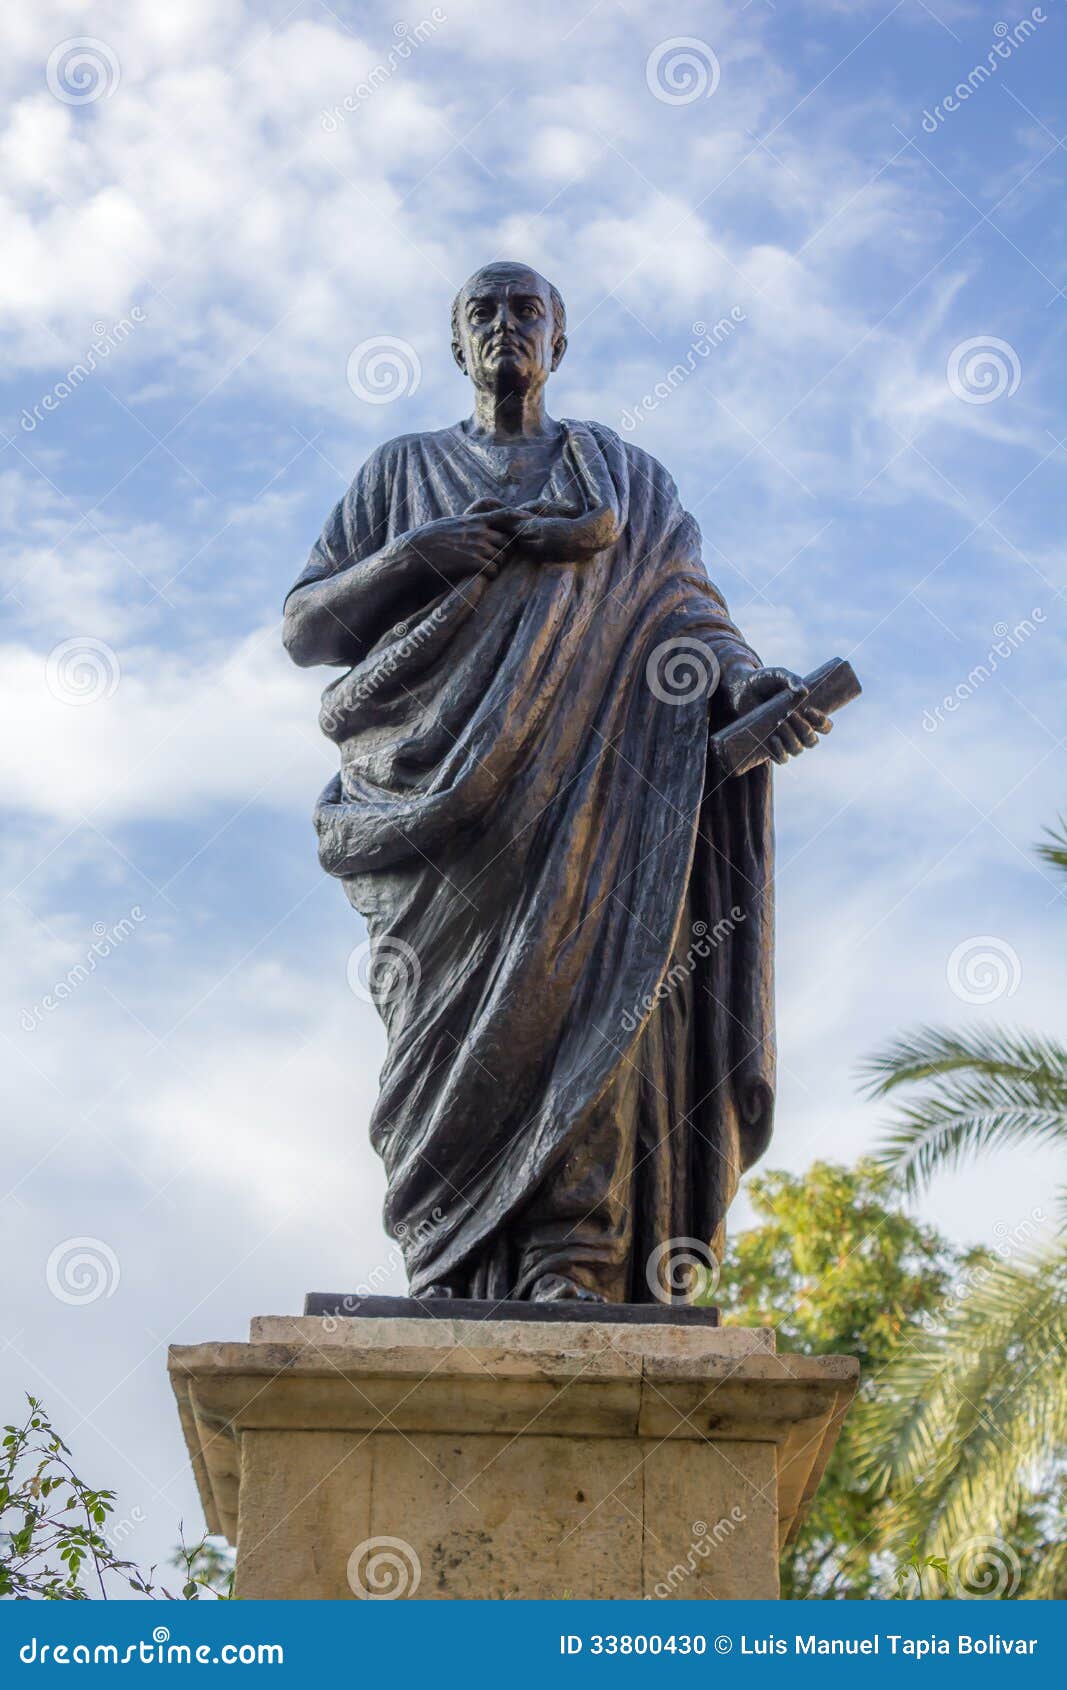 statue of seneca in cordoba